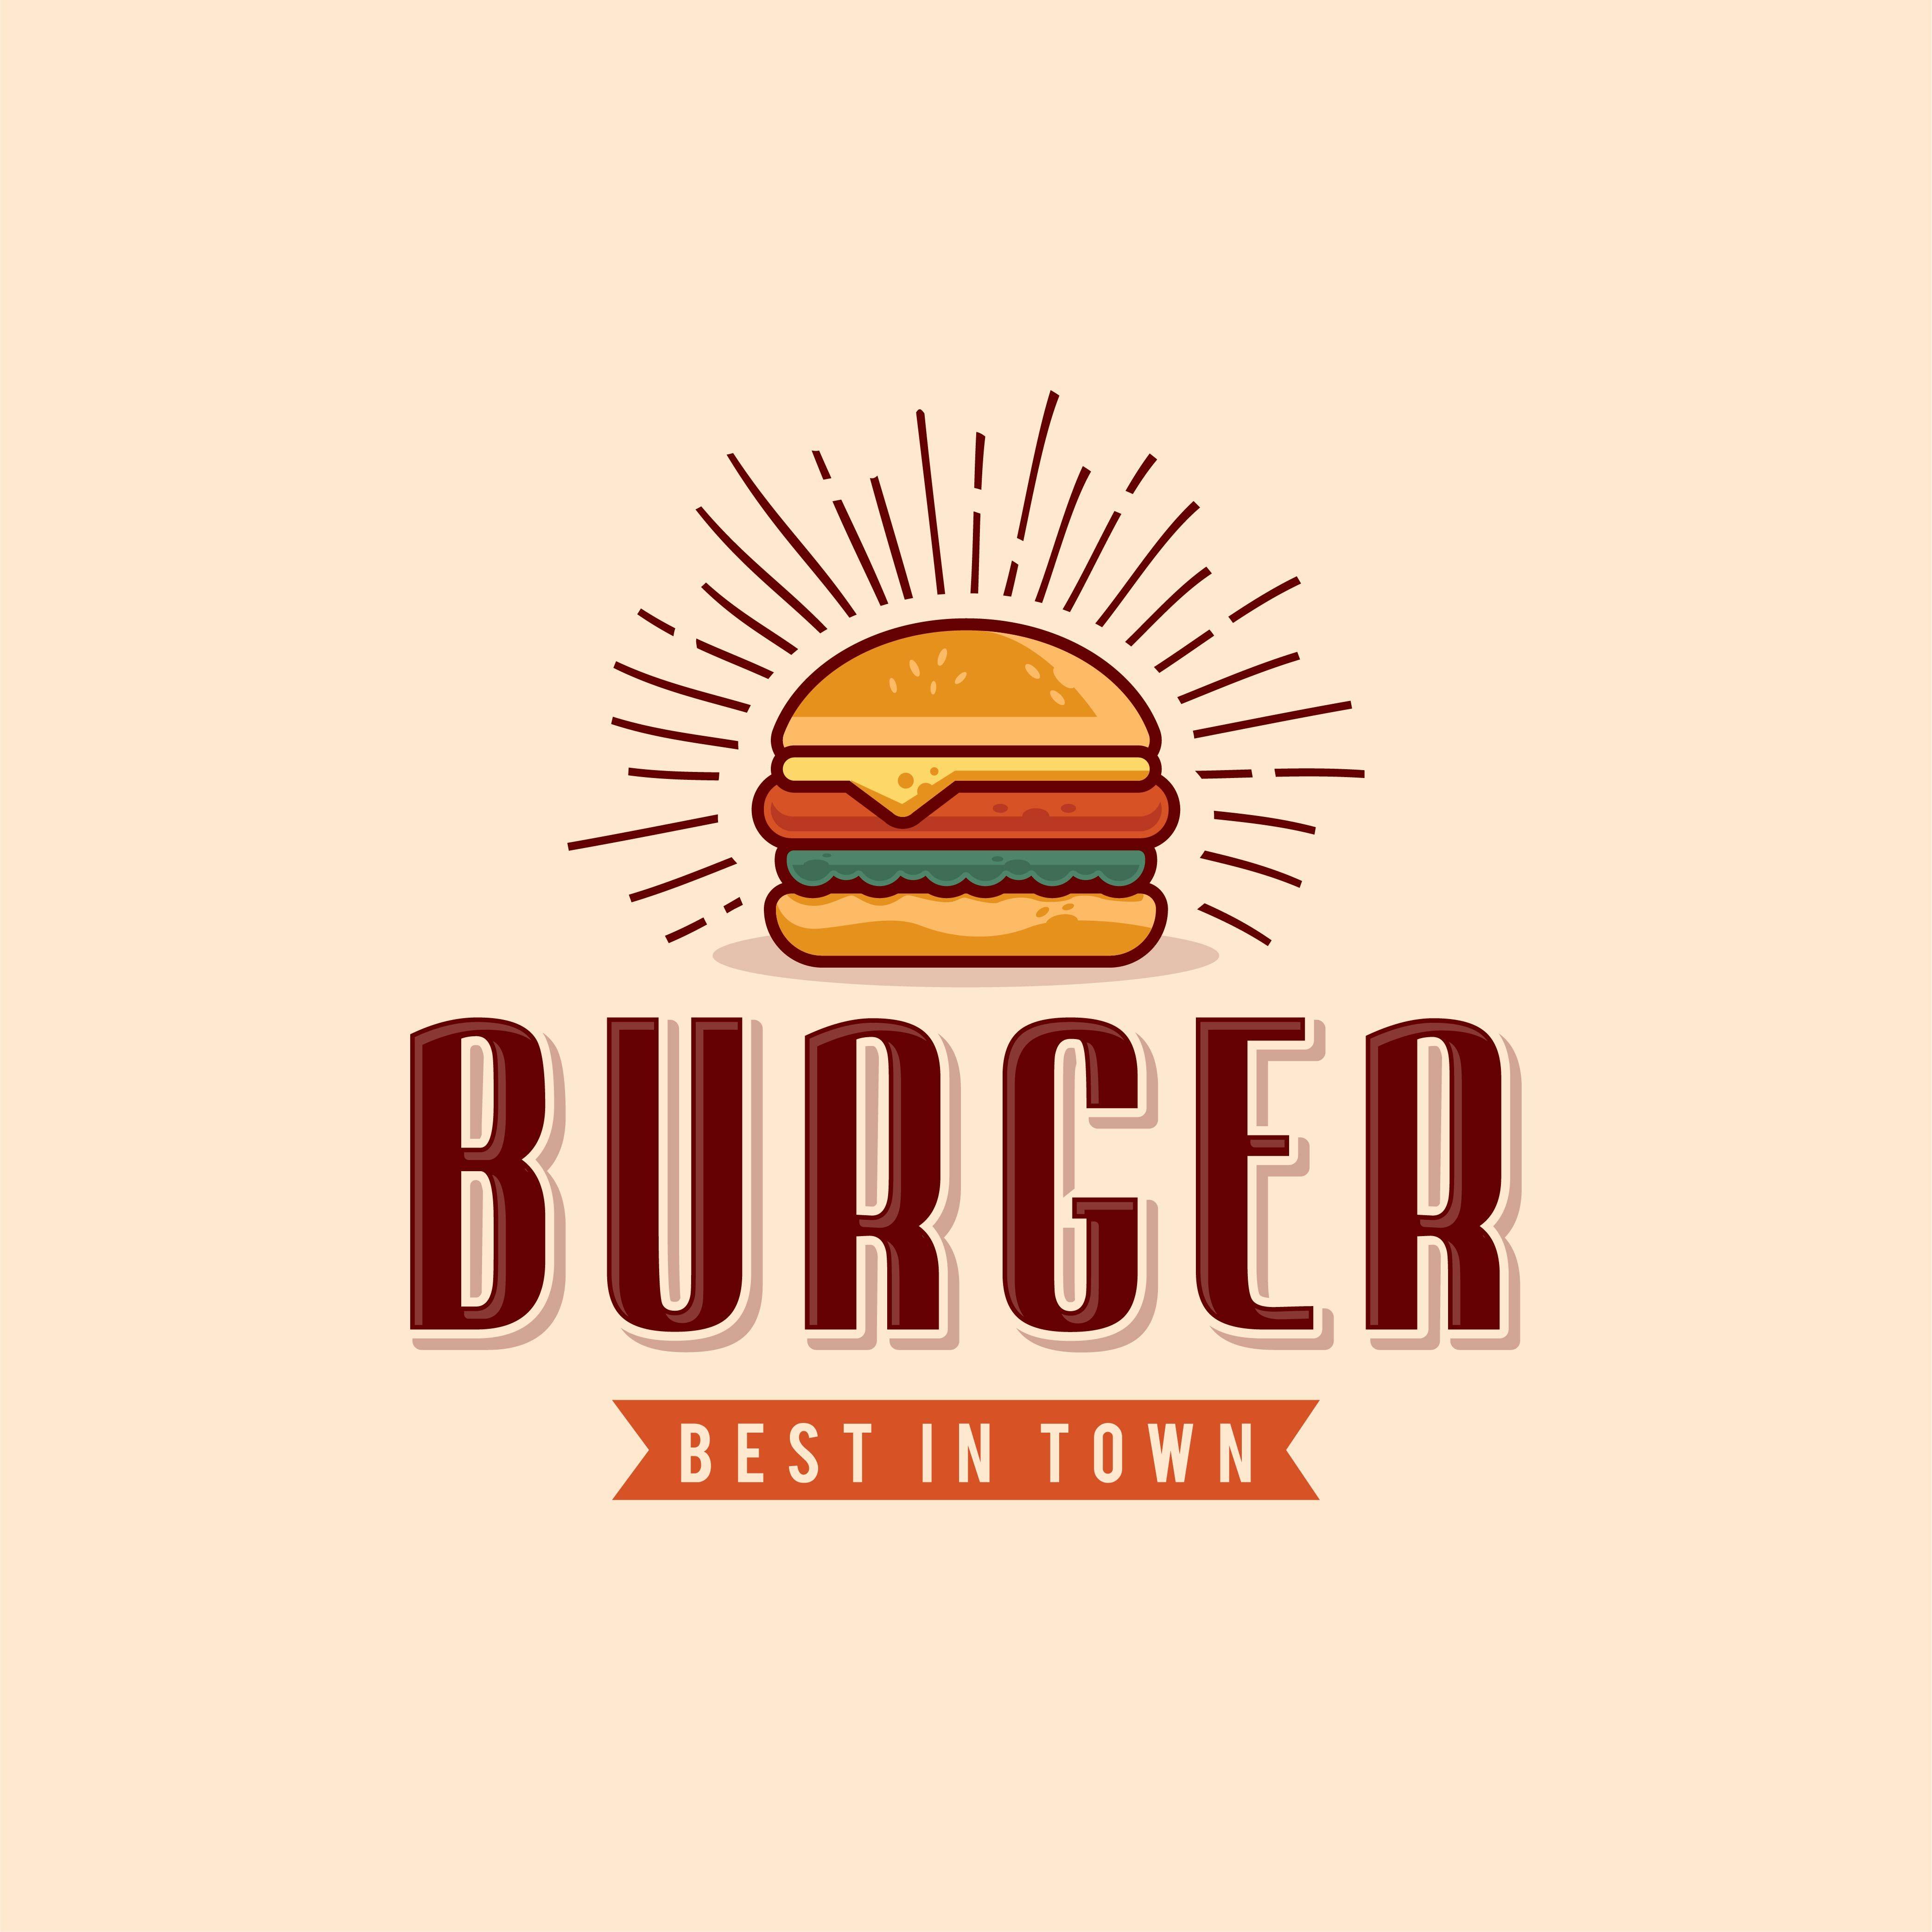 Hamburger Restaurant Logo - Stock burger, logo. #logo #burger #hamburger #restaurant #food ...